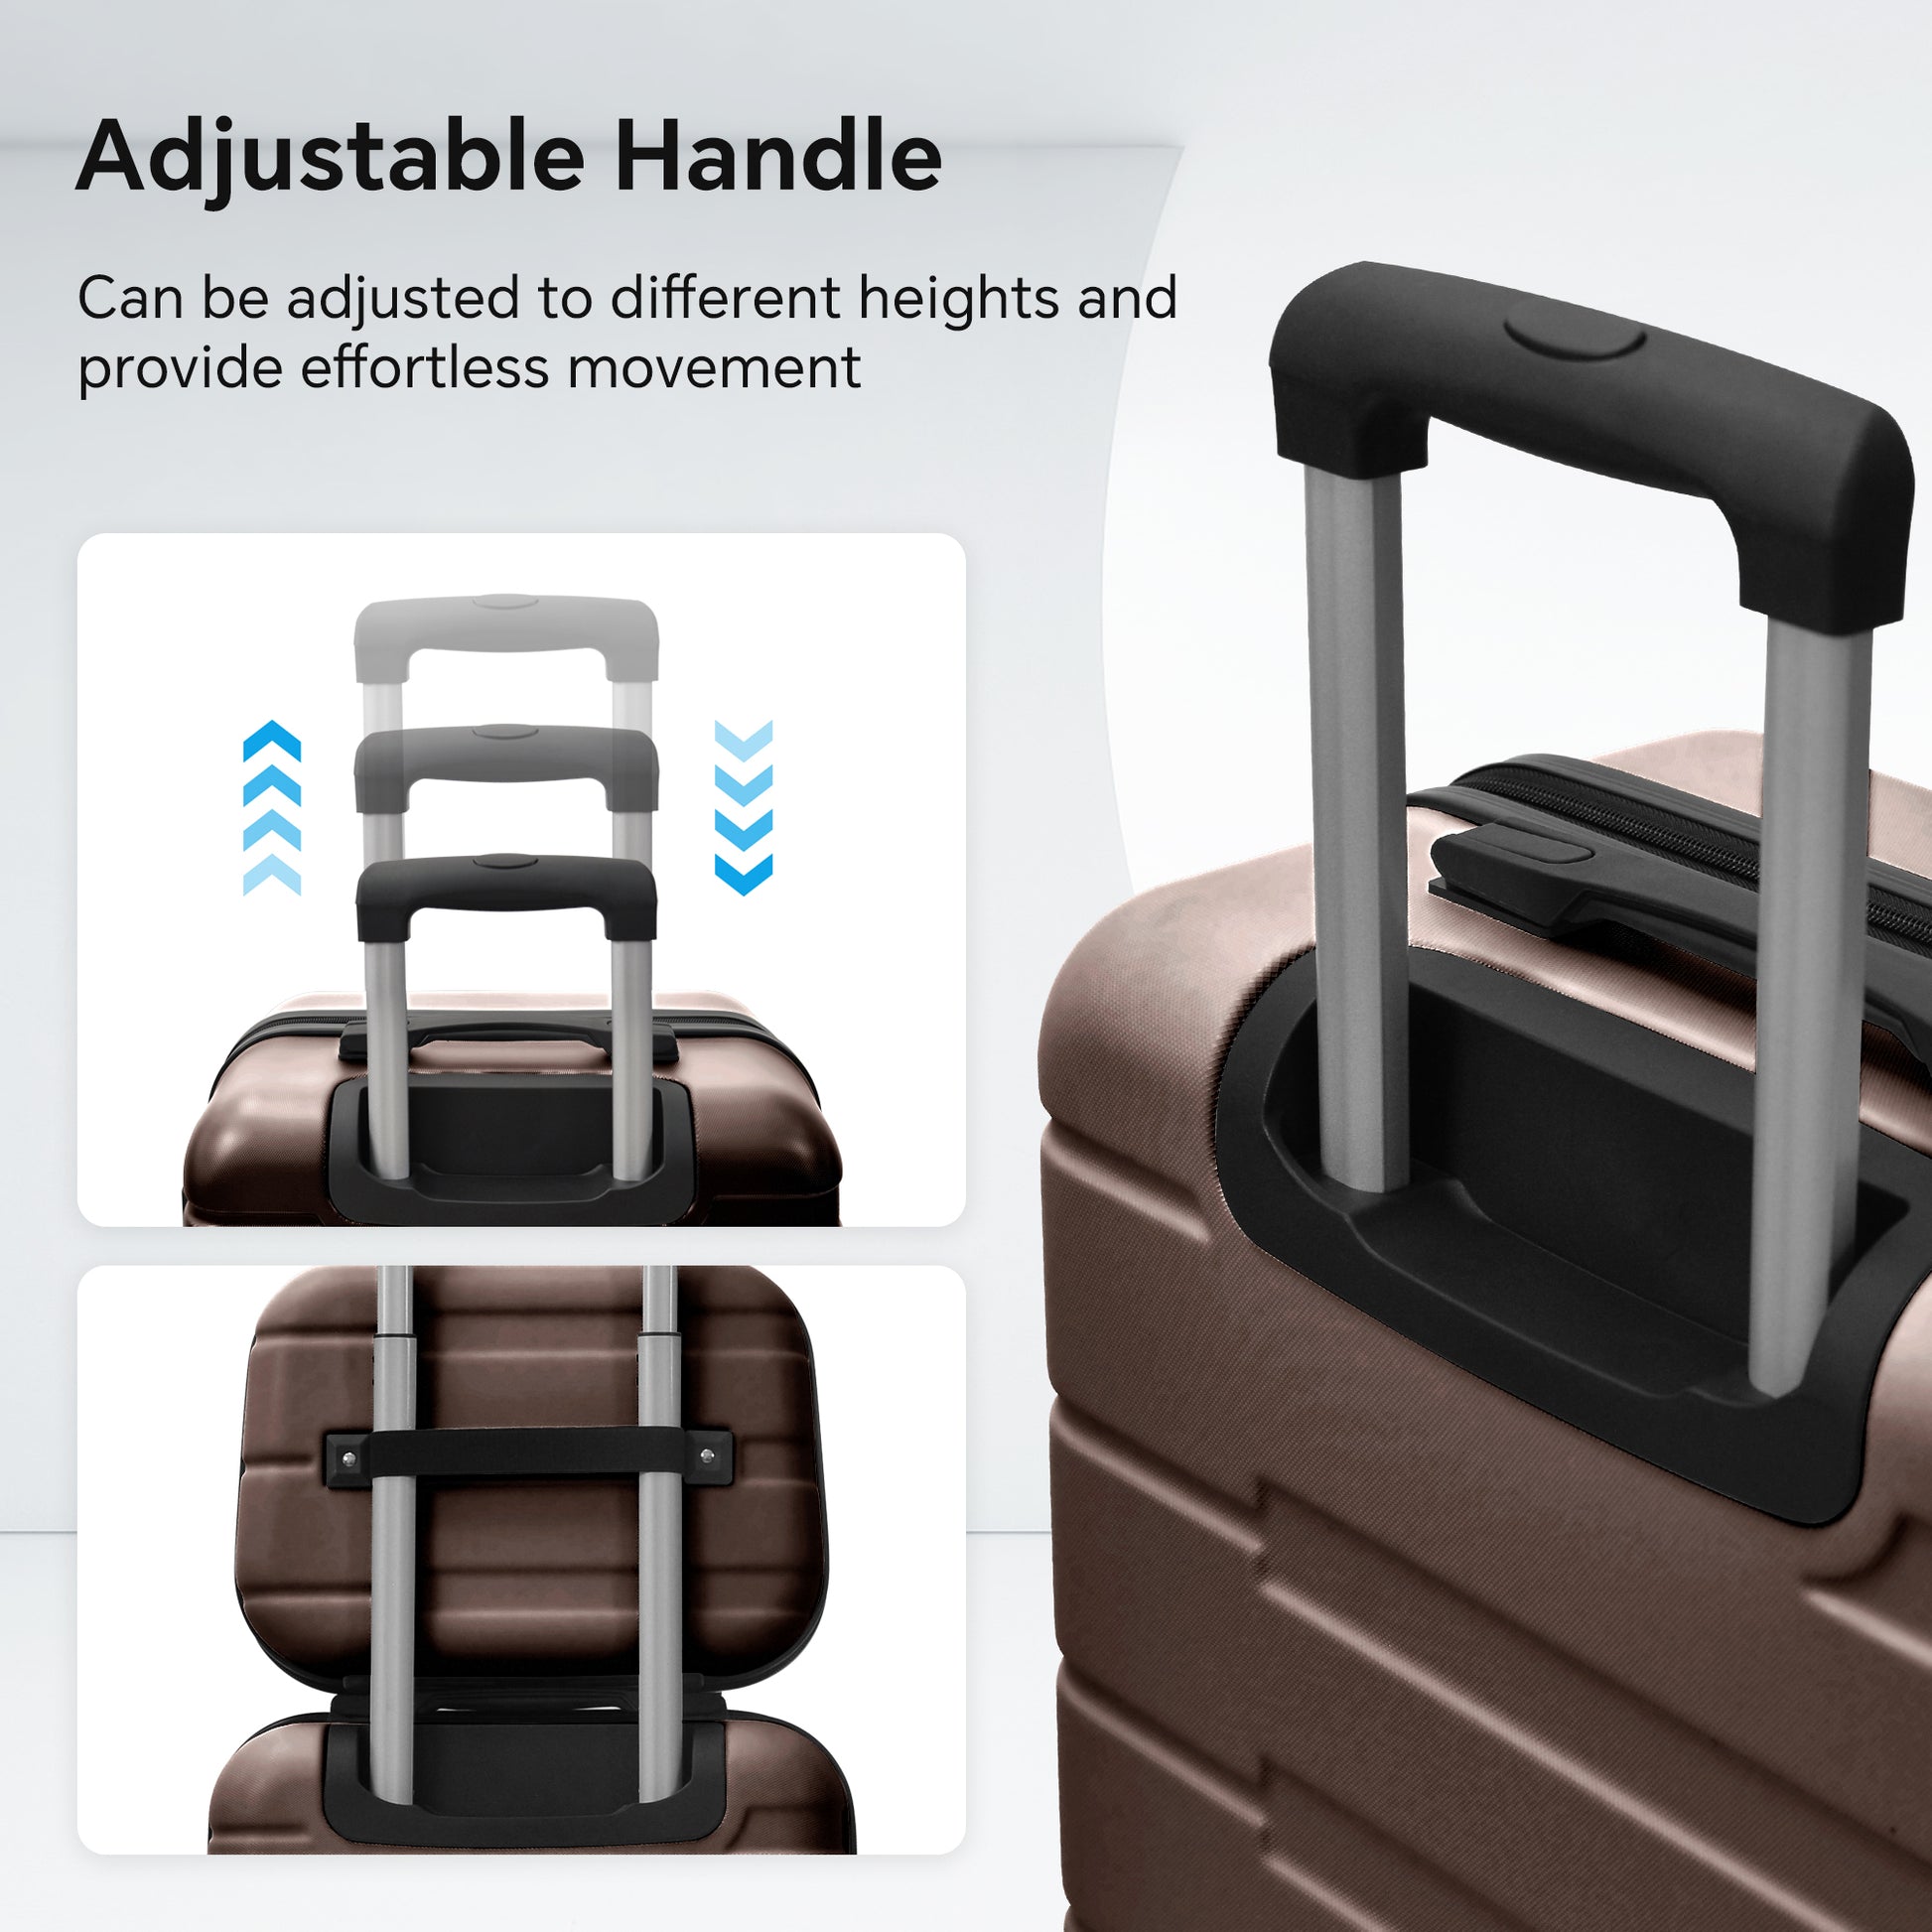 4 Piece Hard Shell Luggage Set,Carry On Suitcase